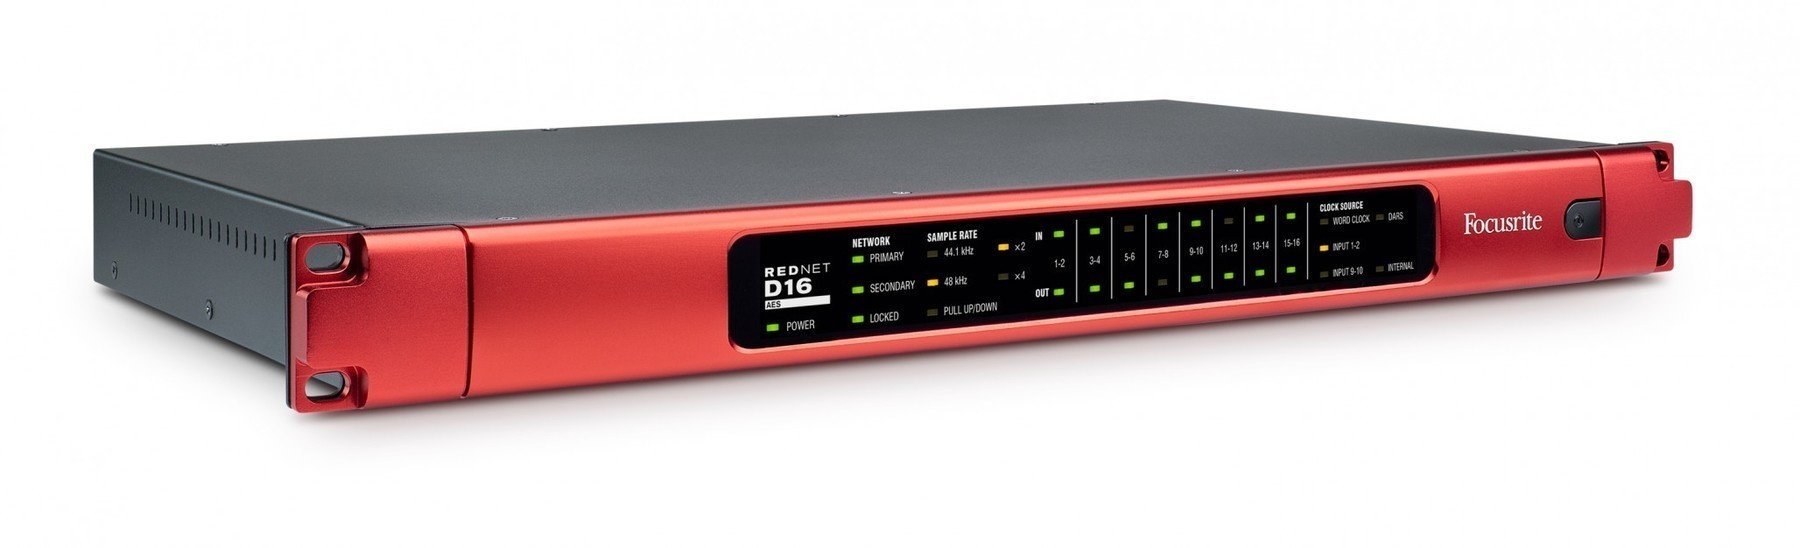 Ethernet-audioomzetter - geluidskaart Focusrite RedNet D16 AES